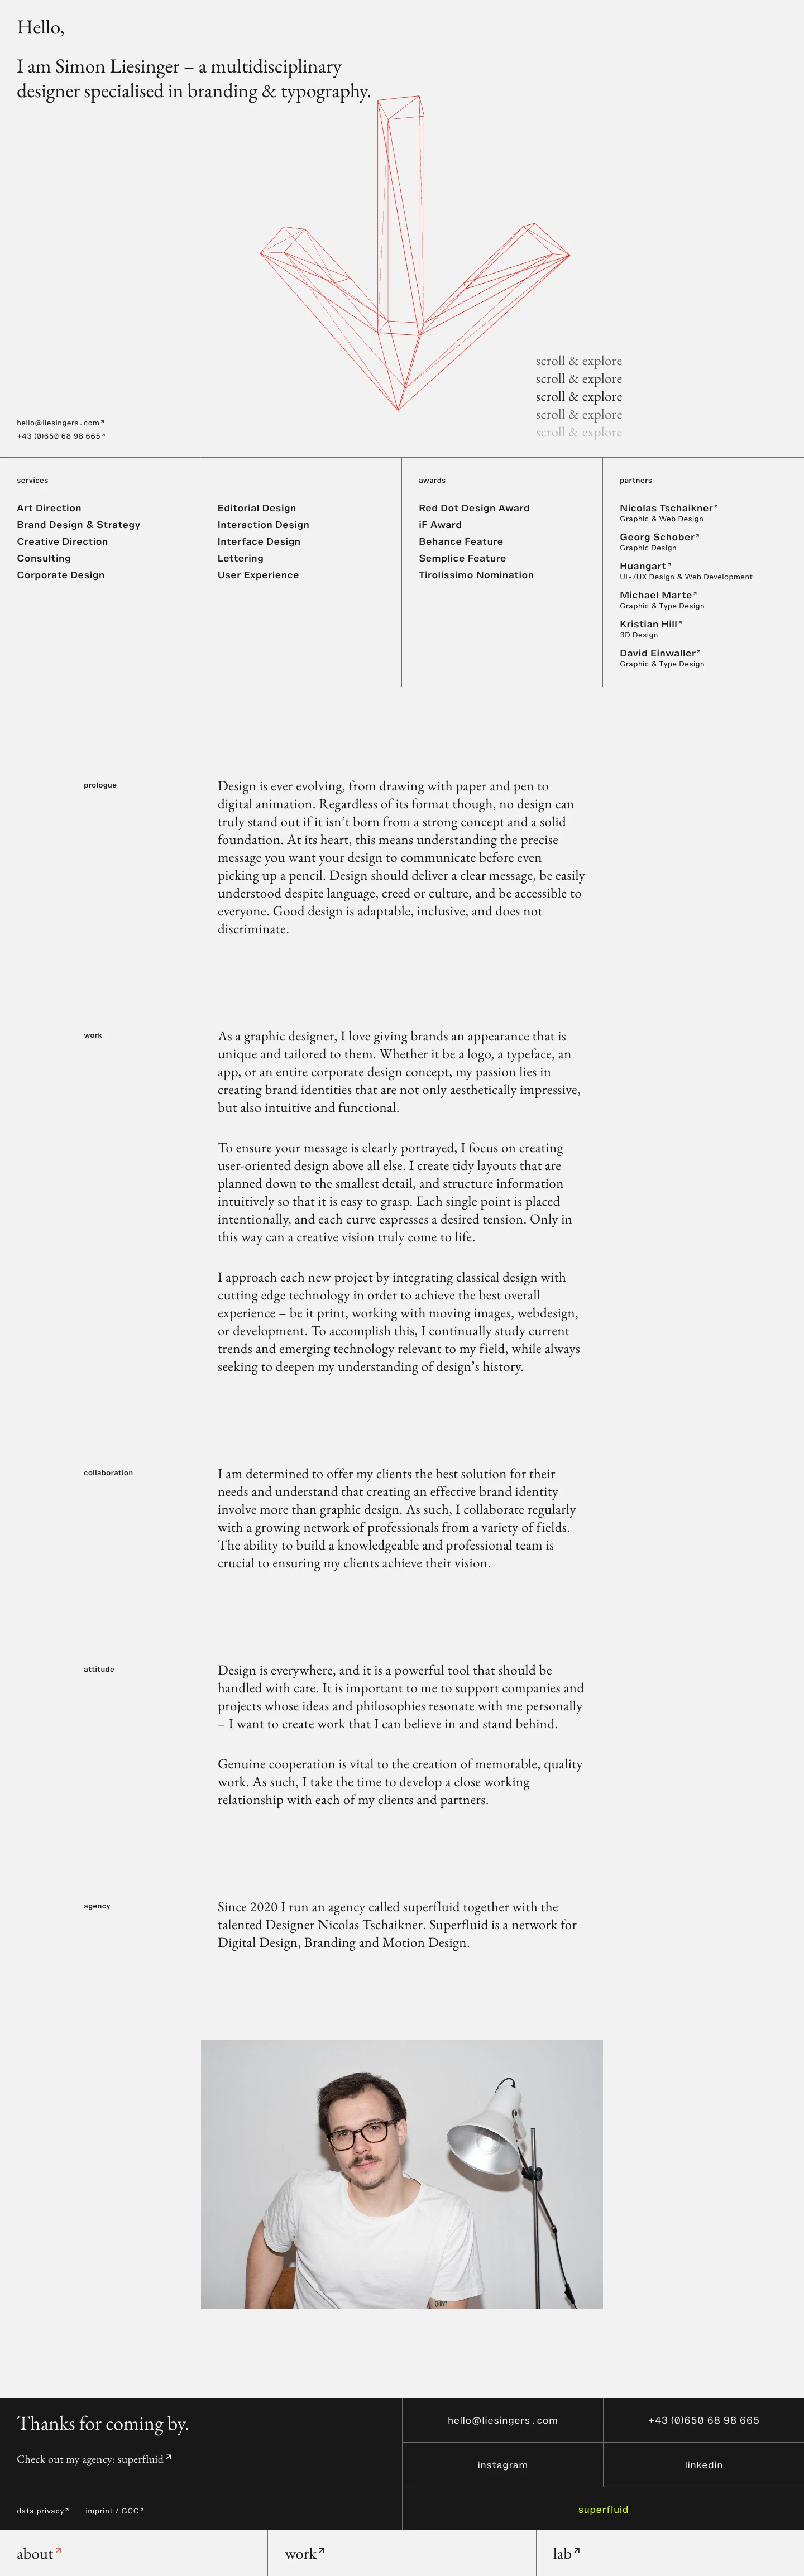 Simon Liesinger Landing Page Example: I am Simon Liesinger – a multidisciplinary designer specialised in branding & typography.